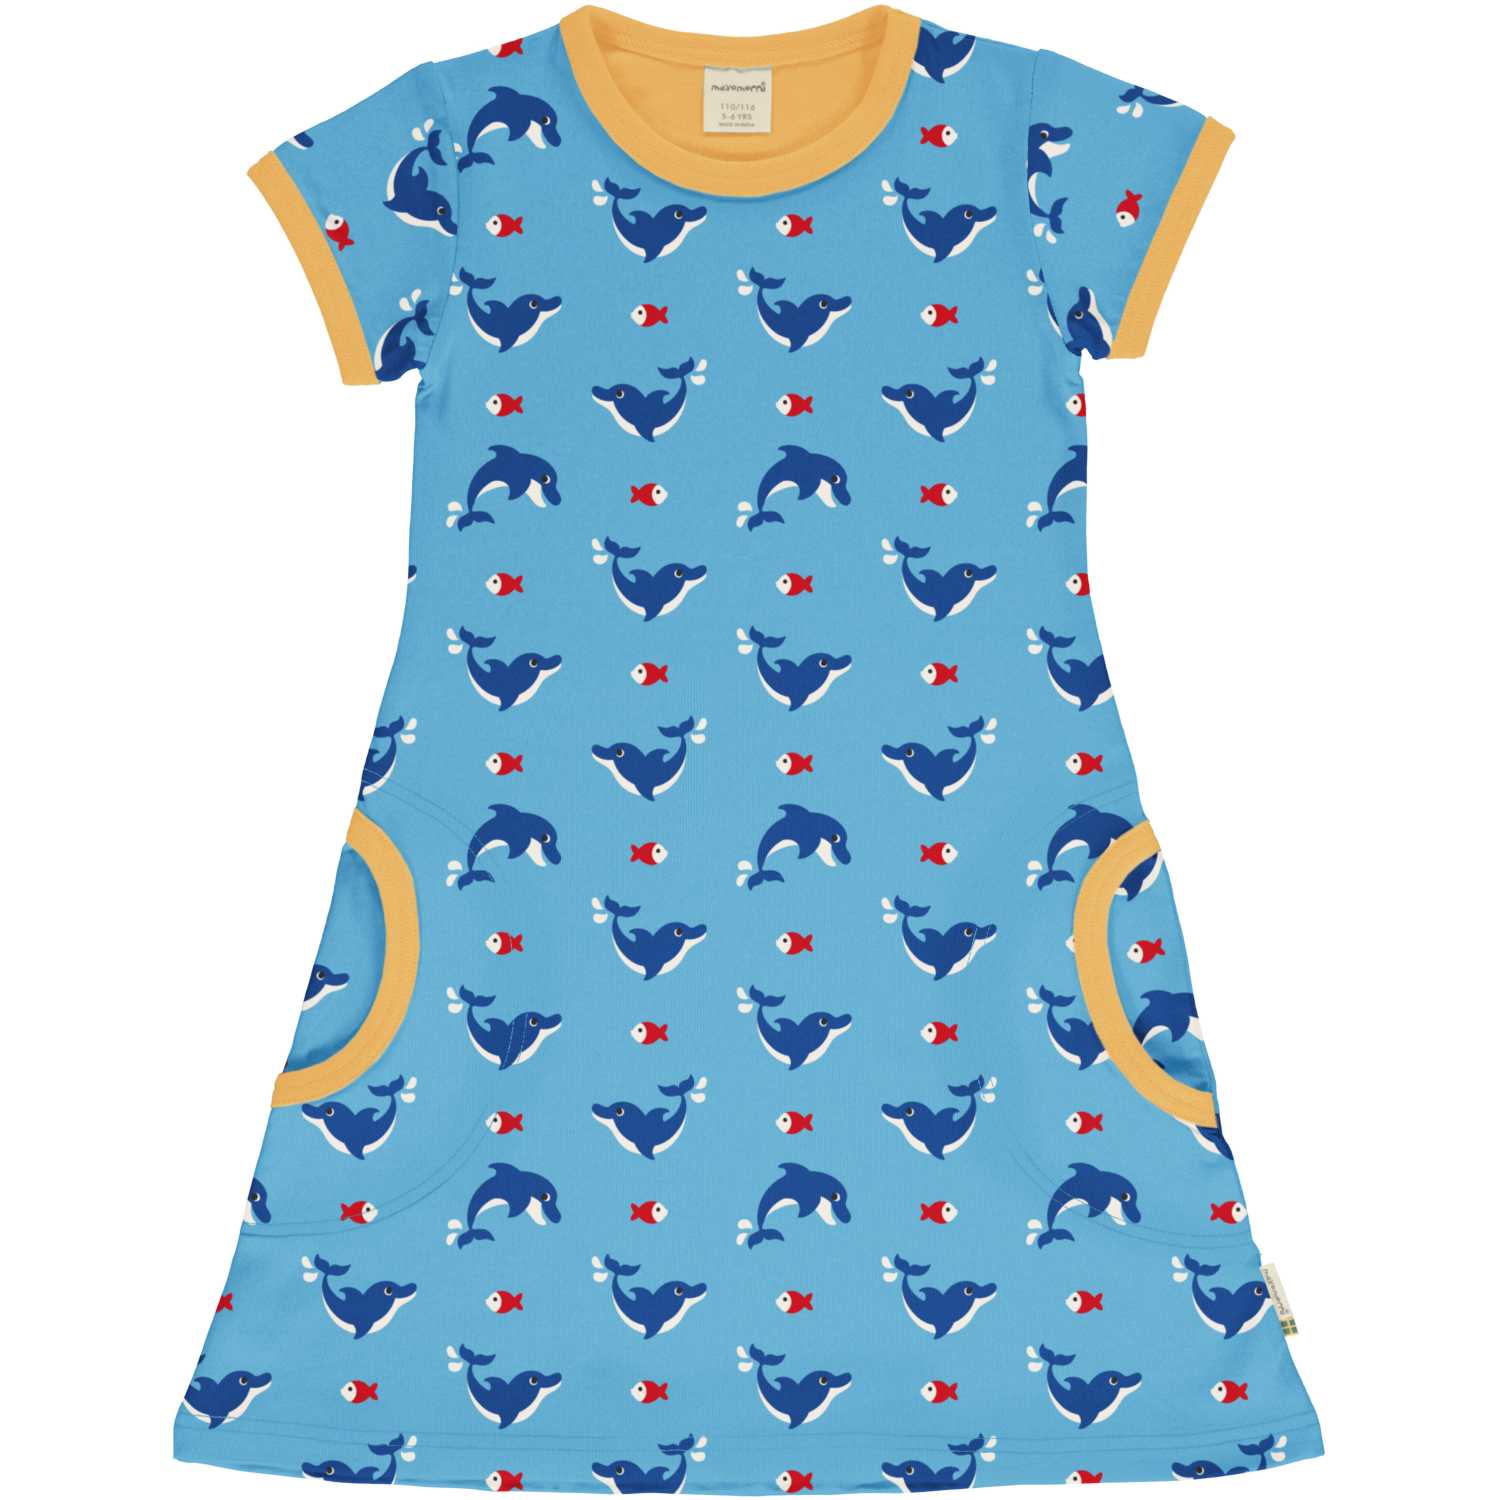 Maxomorra Dolphin Pocket Dress Dxs2409-Sxs2405 Clothing 3-4YRS / Blue,5-6YRS / Blue,7-8YRS / Blue